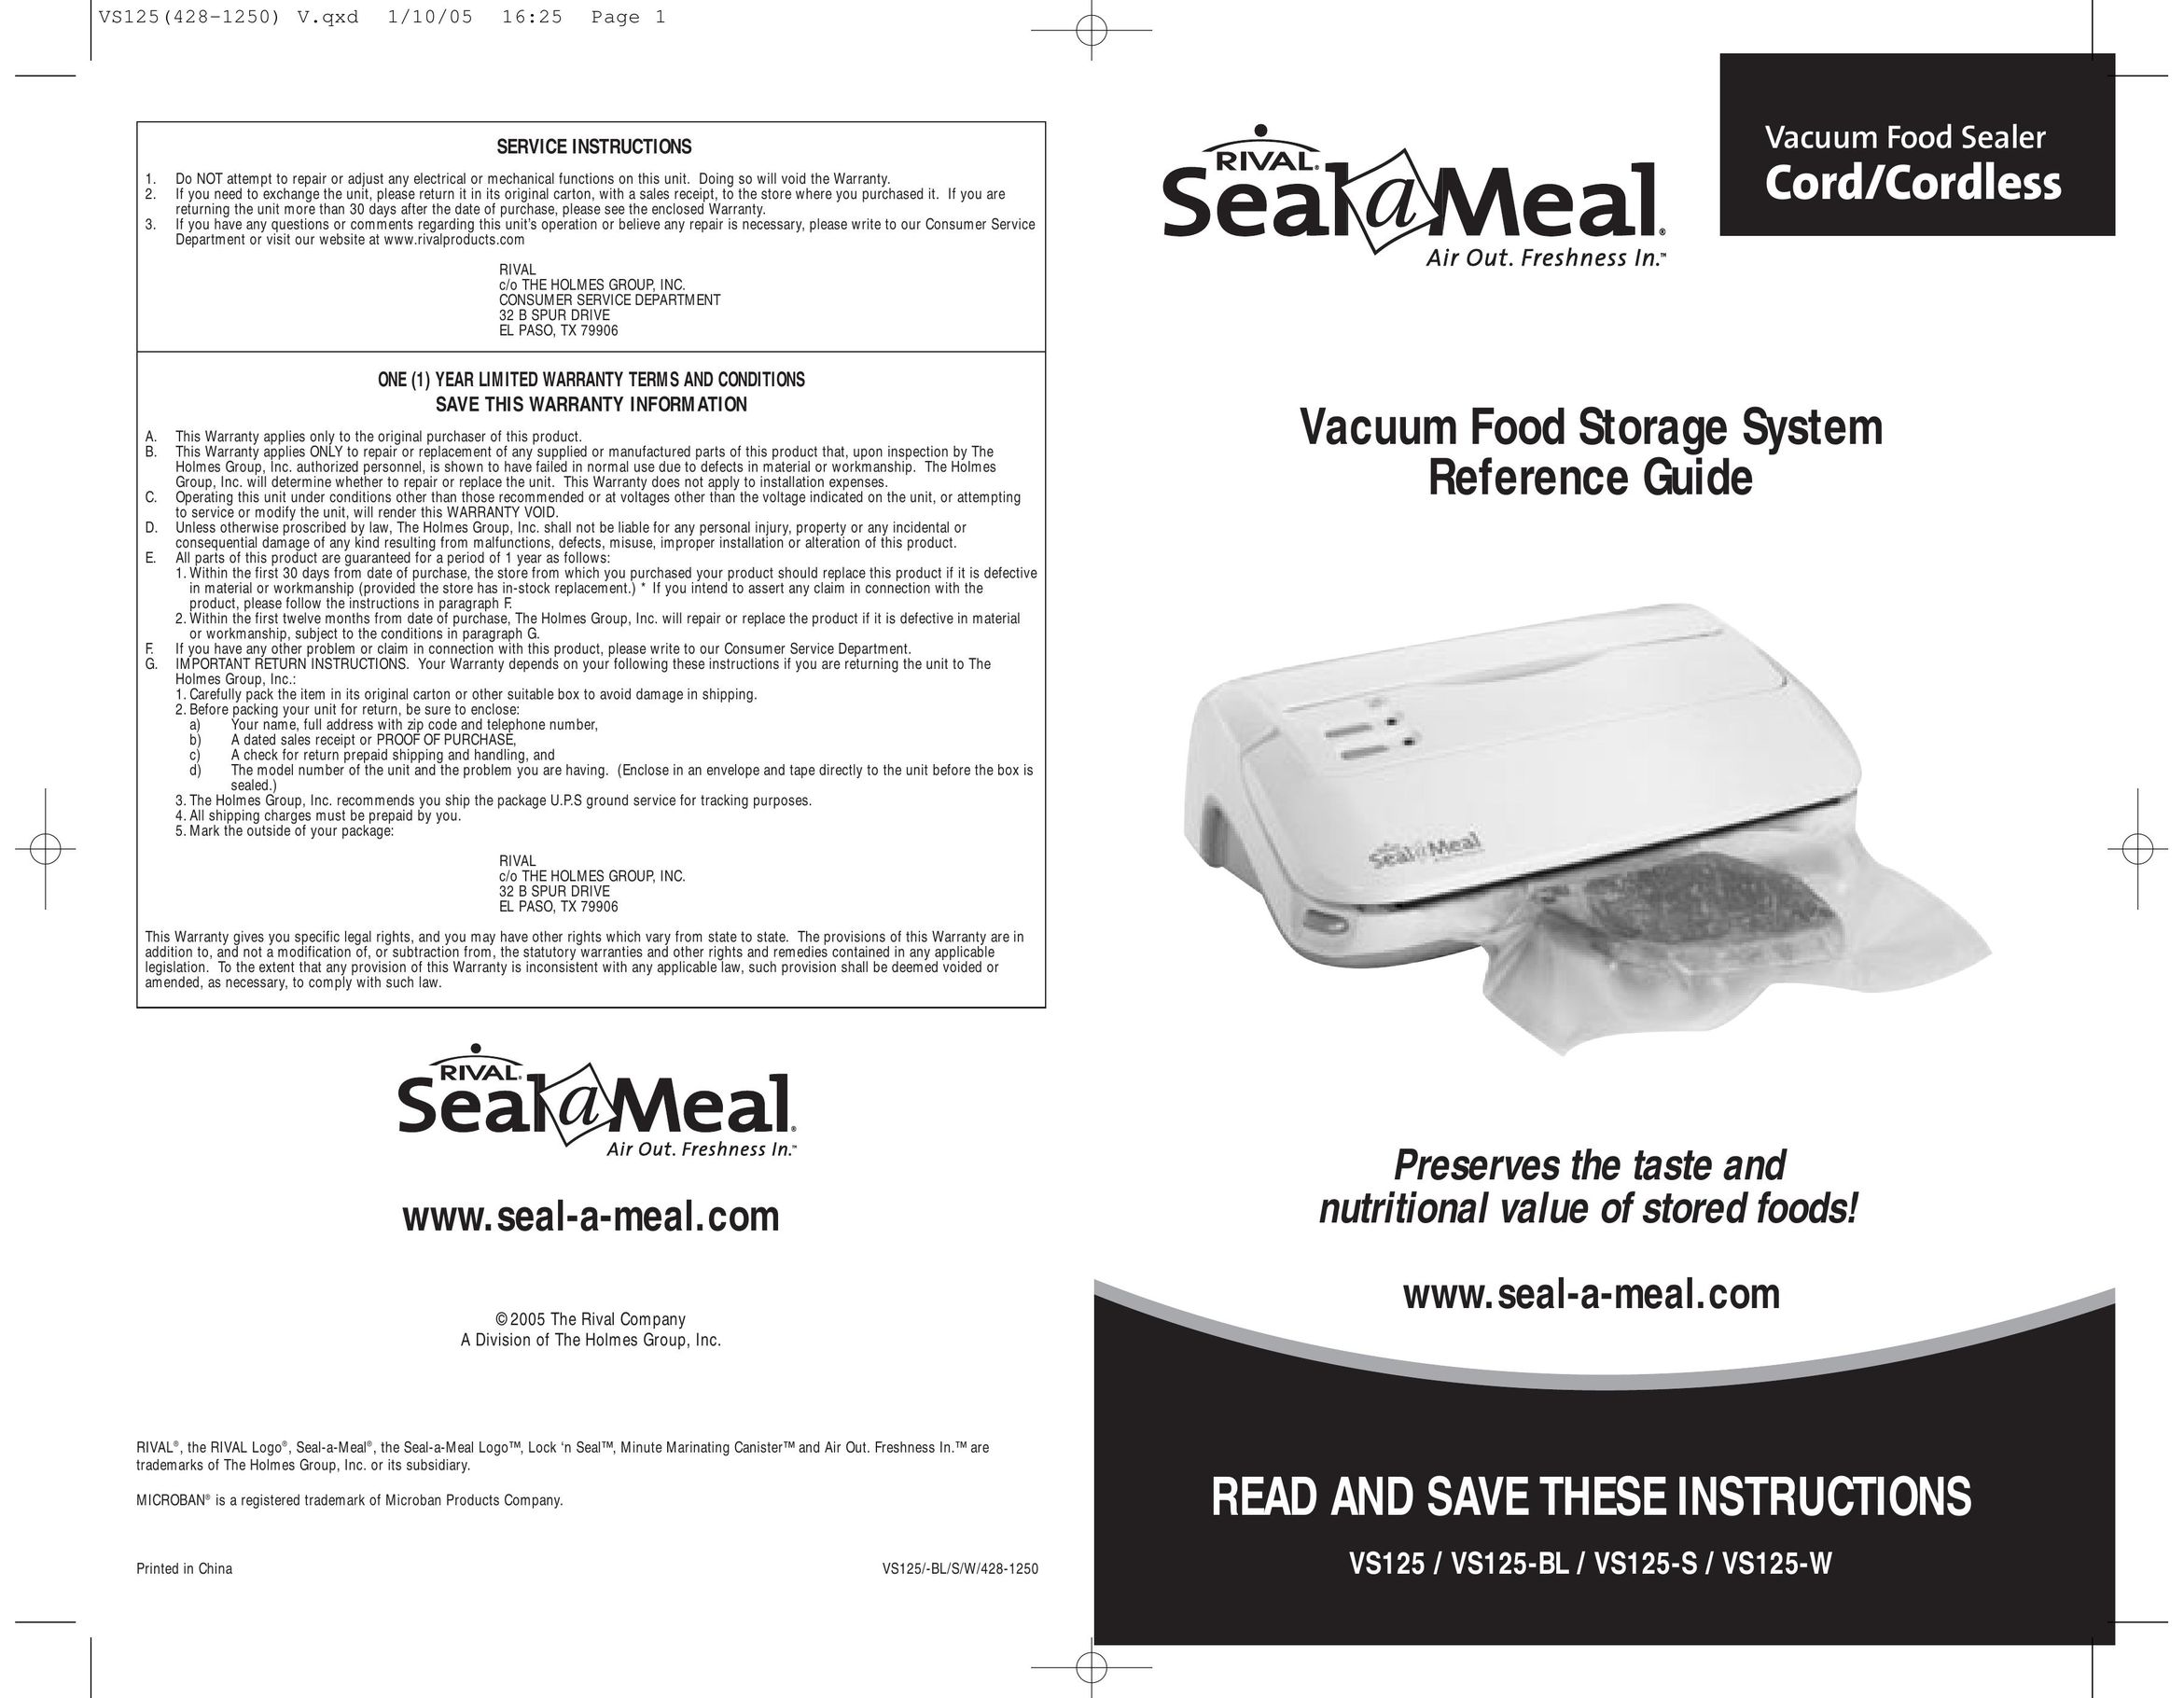 Seal-a-Meal VS125-BL Food Saver User Manual